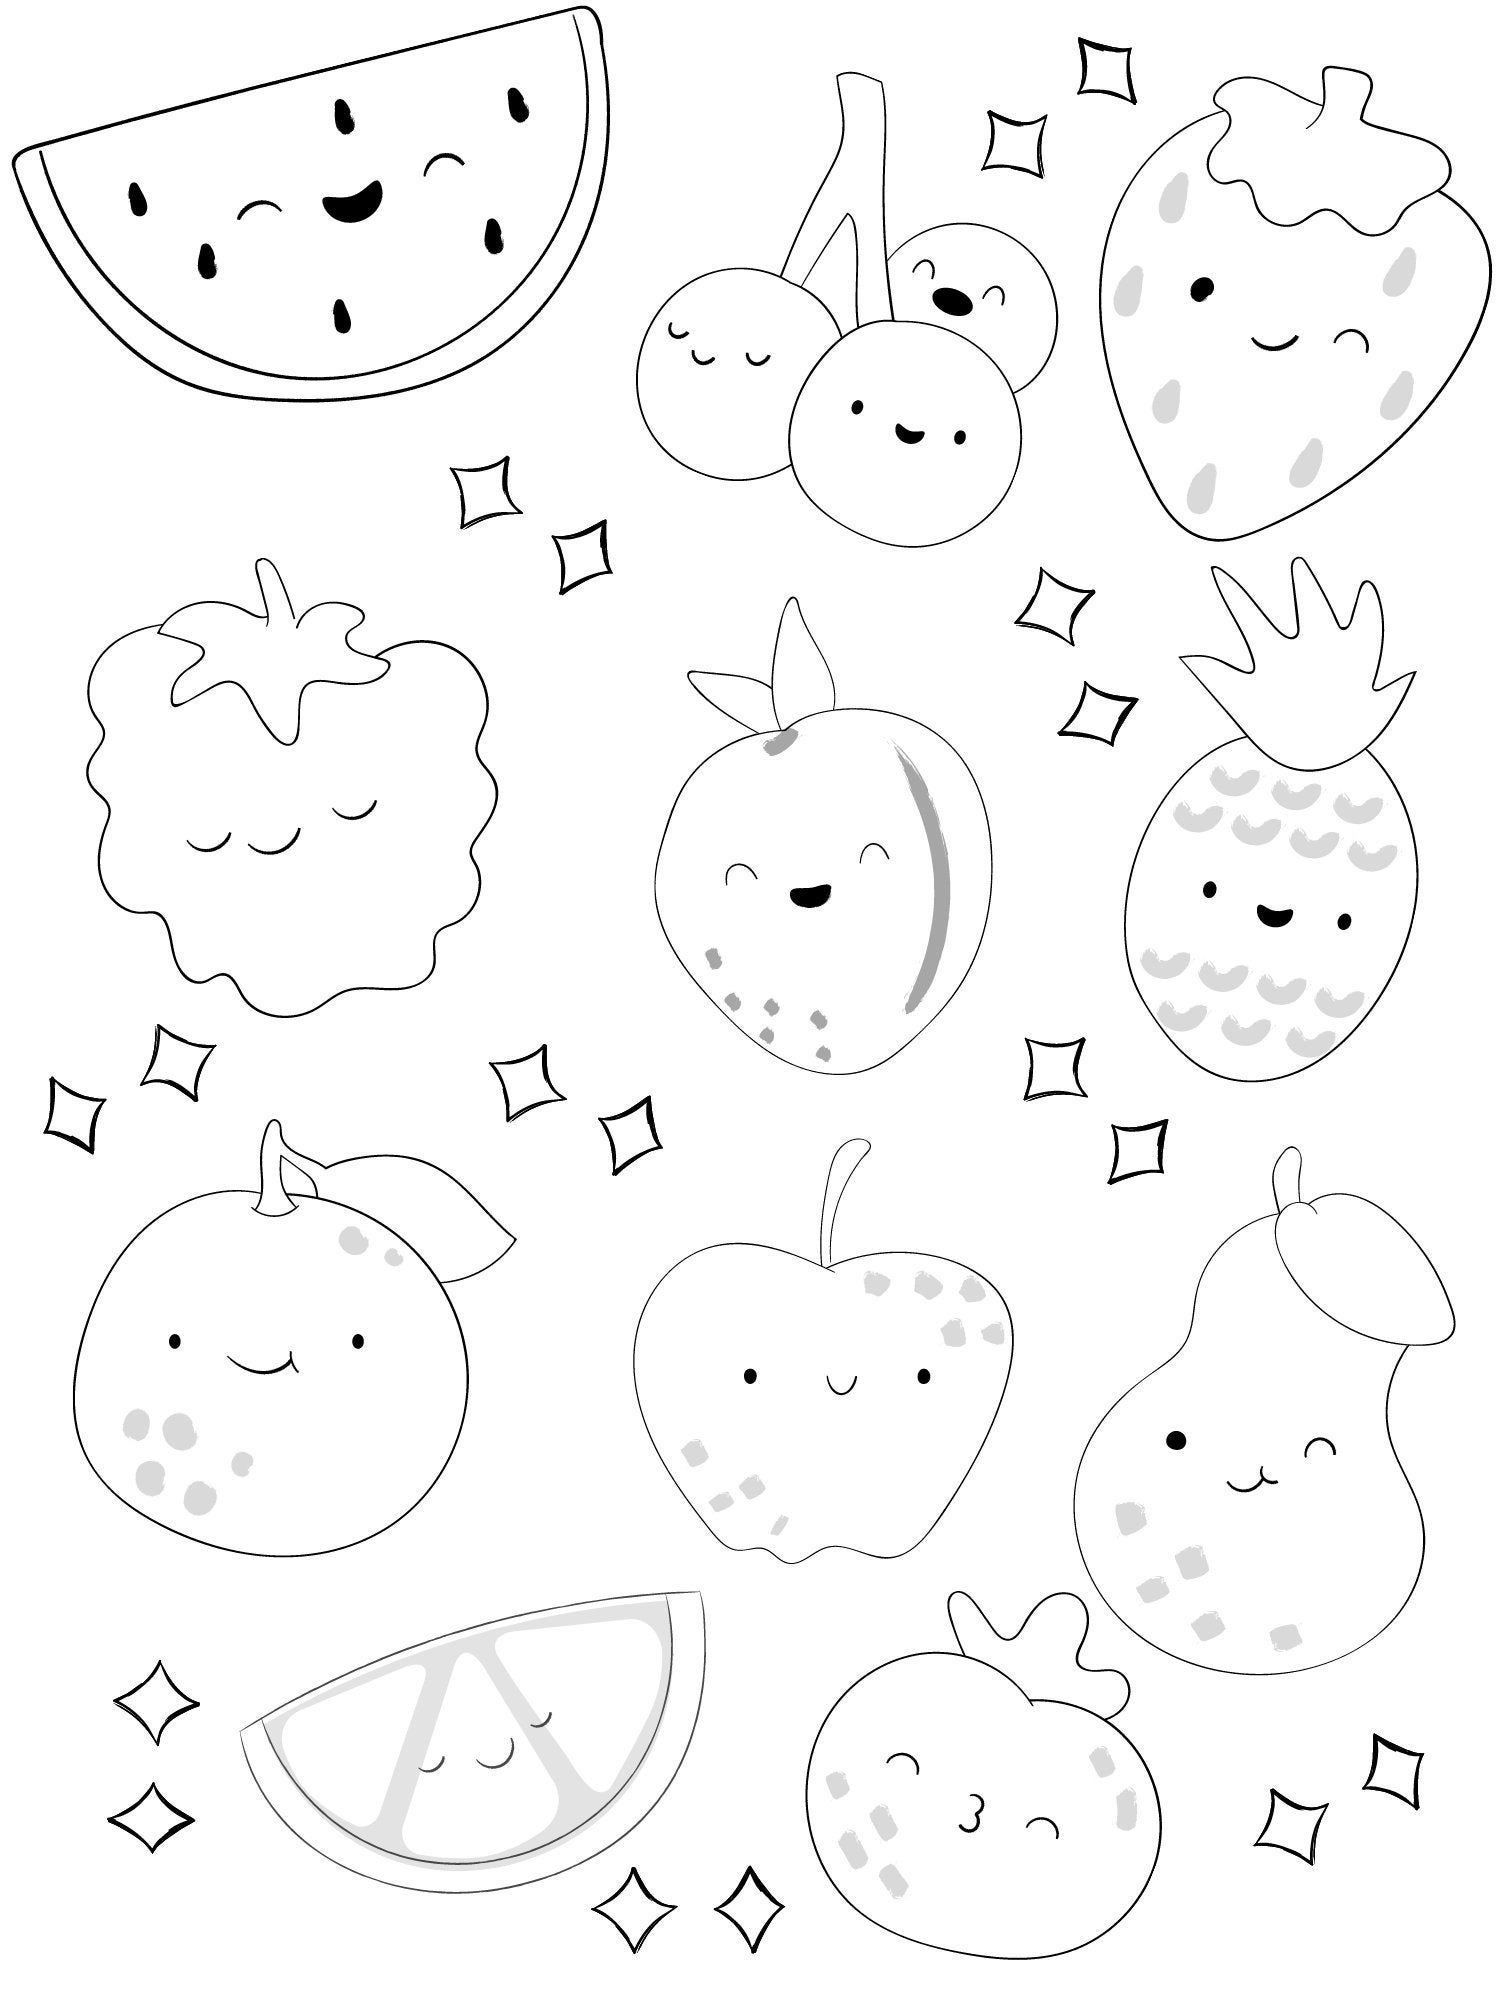 Food coloring pages kawaii fruit coloring page kawaii printable pdf for kids and adults